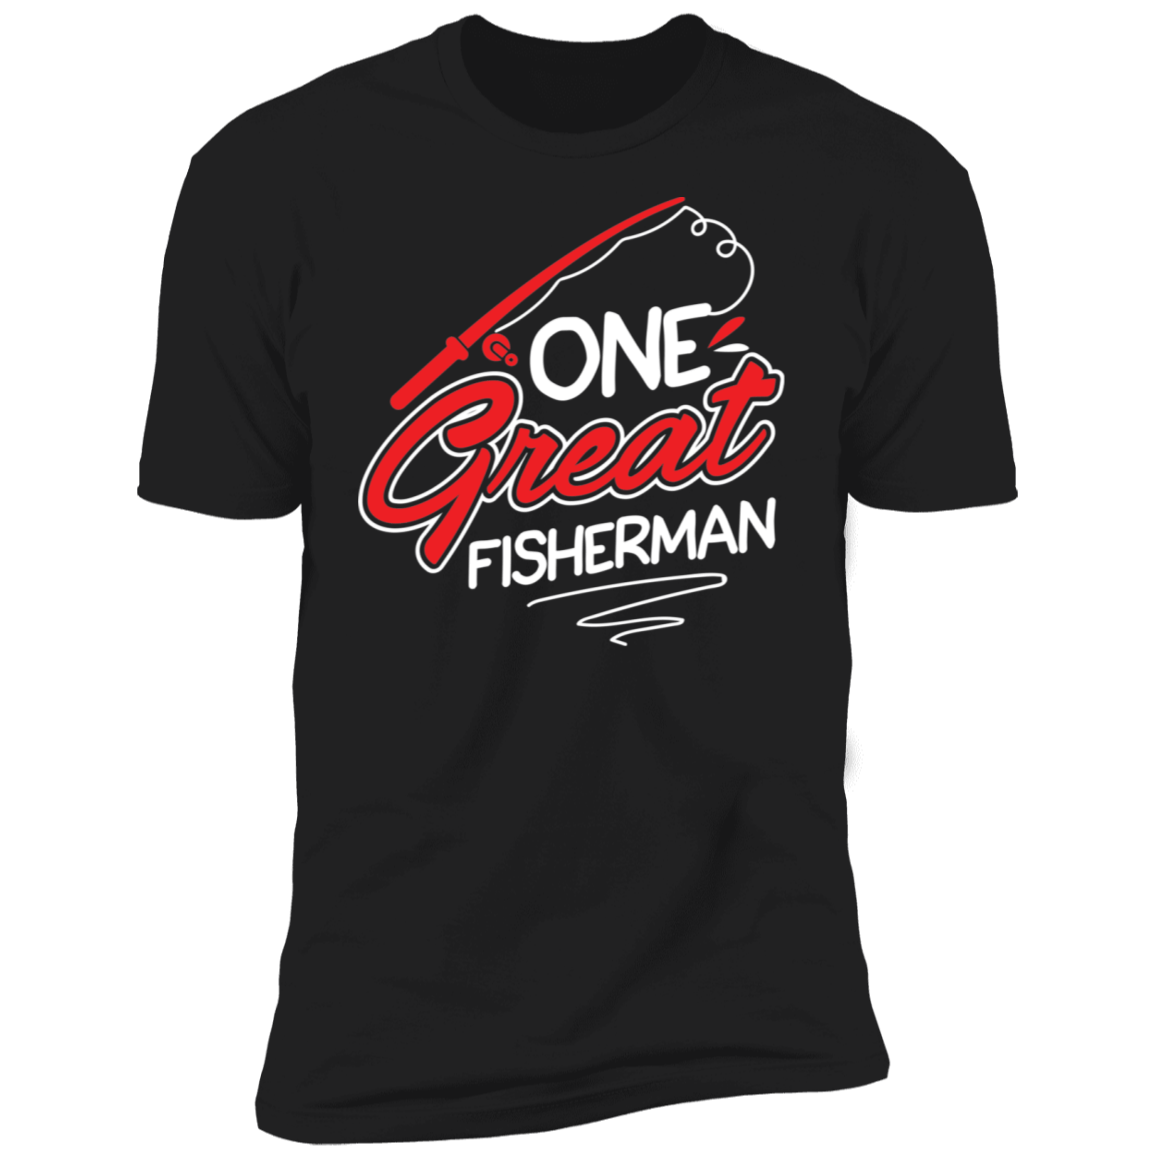 One Great Fisherman (6079400345772)